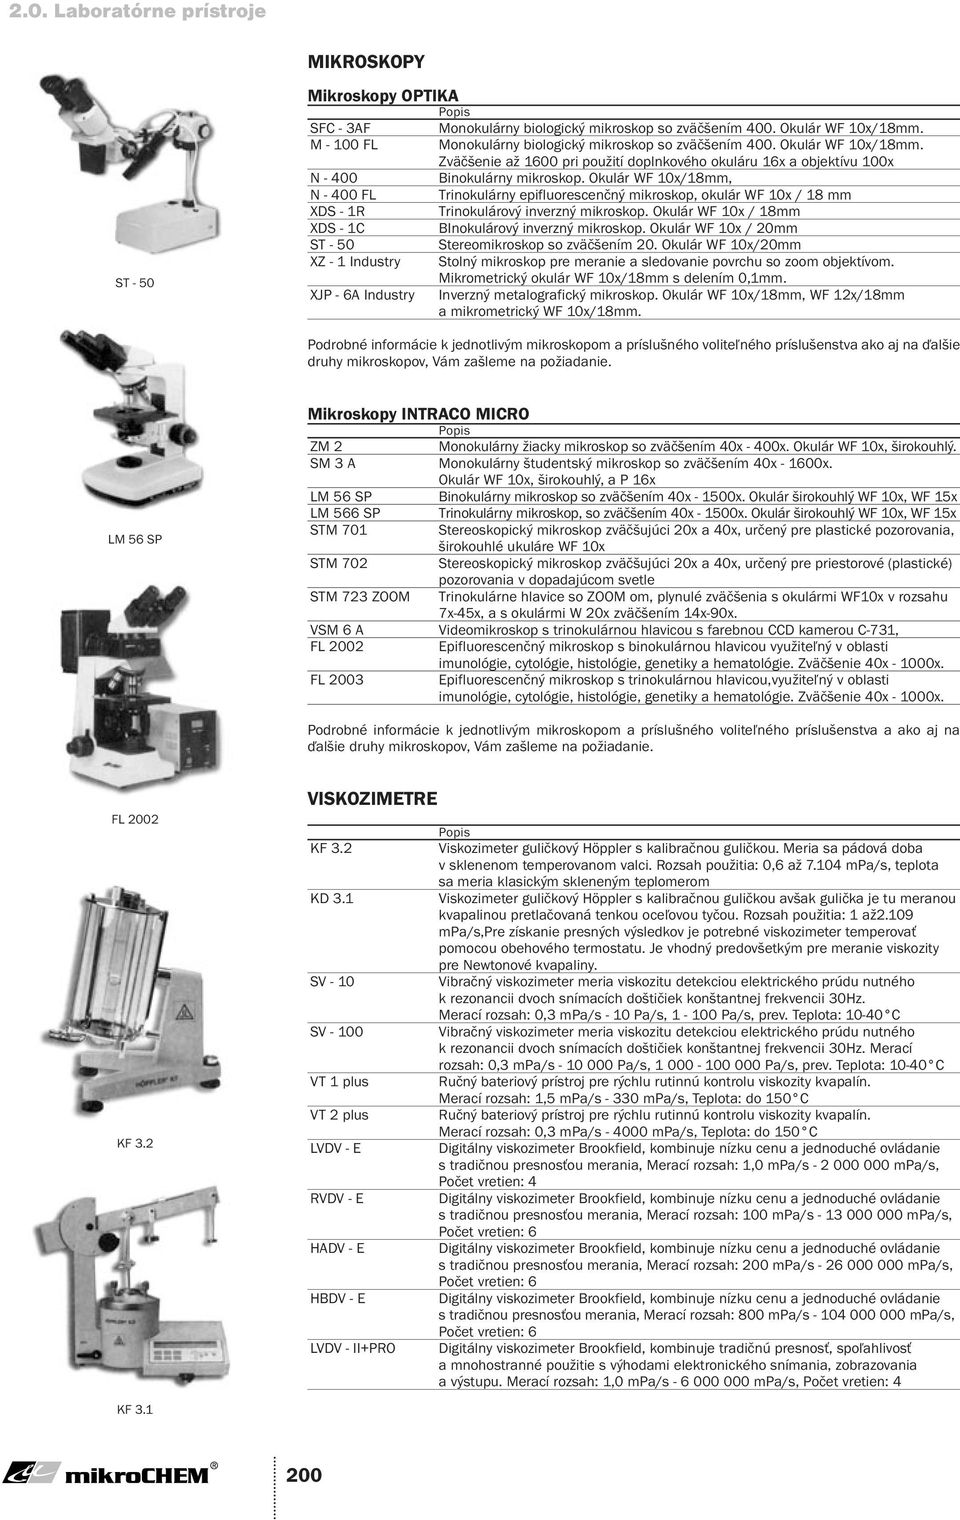 Okulár WF 10x/18mm, Trinokulárny epifluorescenčný mikroskop, okulár WF 10x / 18 mm Trinokulárový inverzný mikroskop. Okulár WF 10x / 18mm BInokulárový inverzný mikroskop.